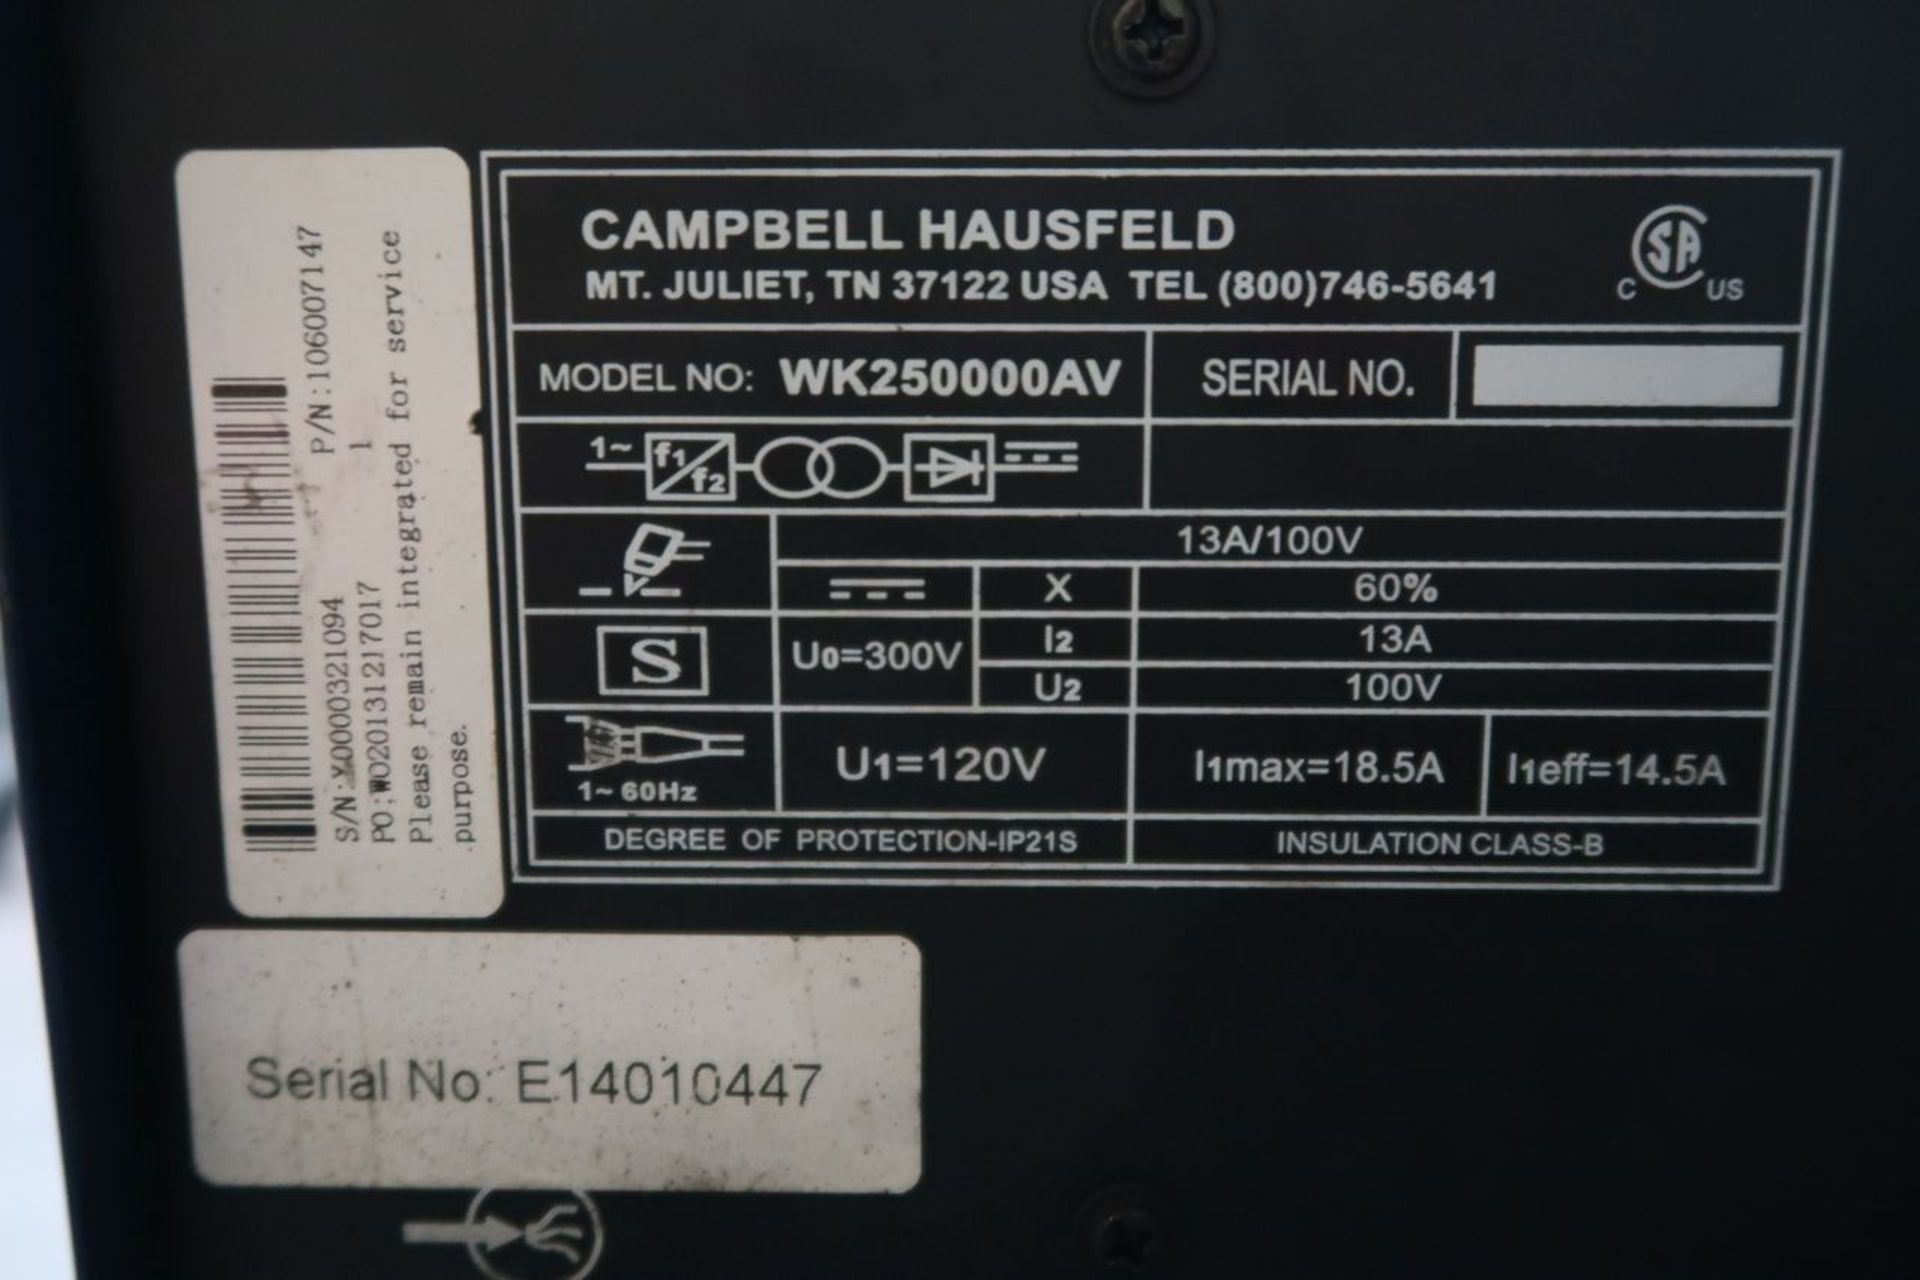 Cambell Hausfeld 120V Model WK250000AV Inverter Plasma Cutter; Output: 300V, 13A, 60% Duty Cycle, - Image 4 of 4